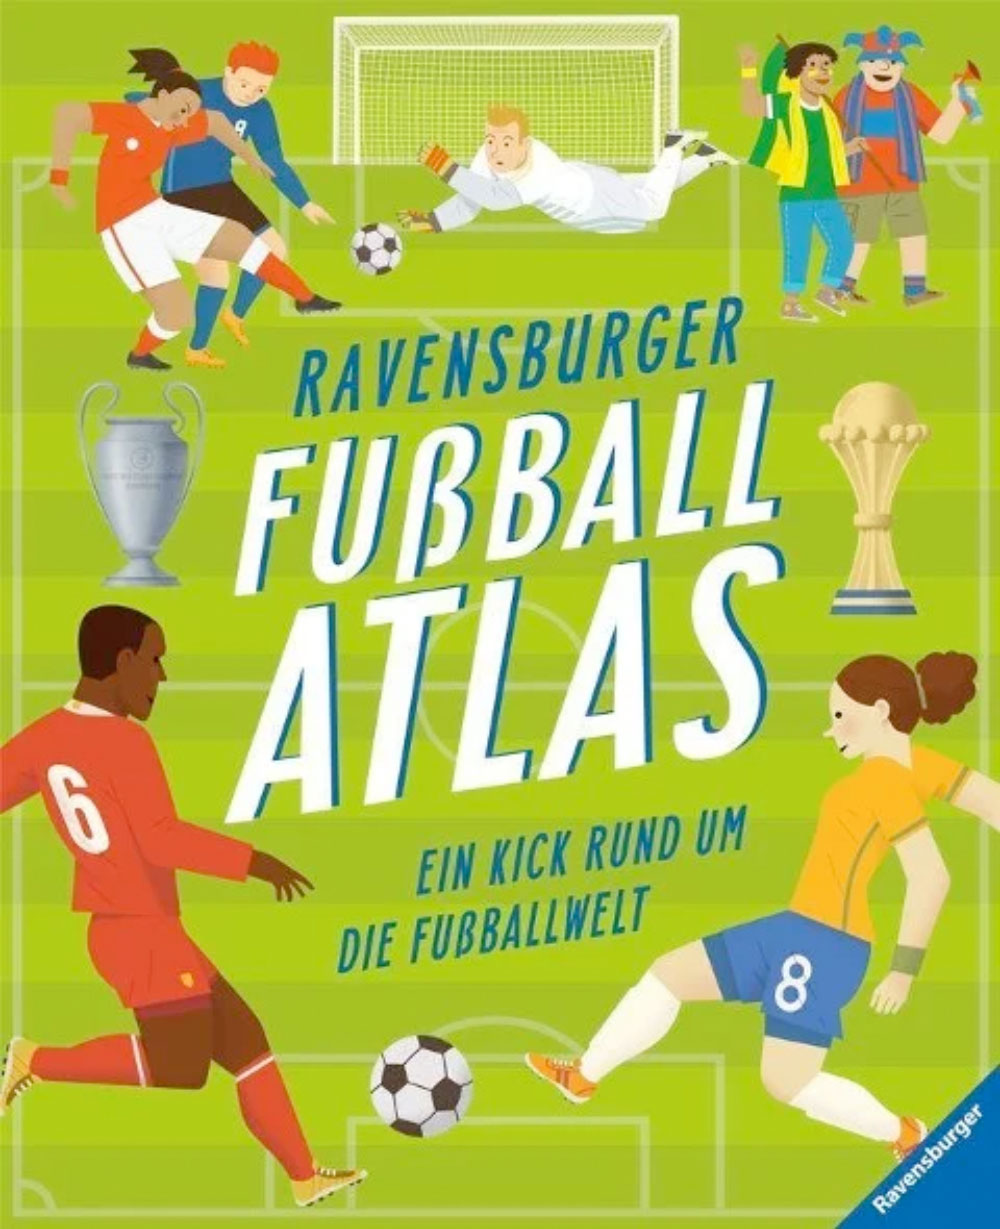 »Ravensburger Fußballatlas« — RAVENSBURGER